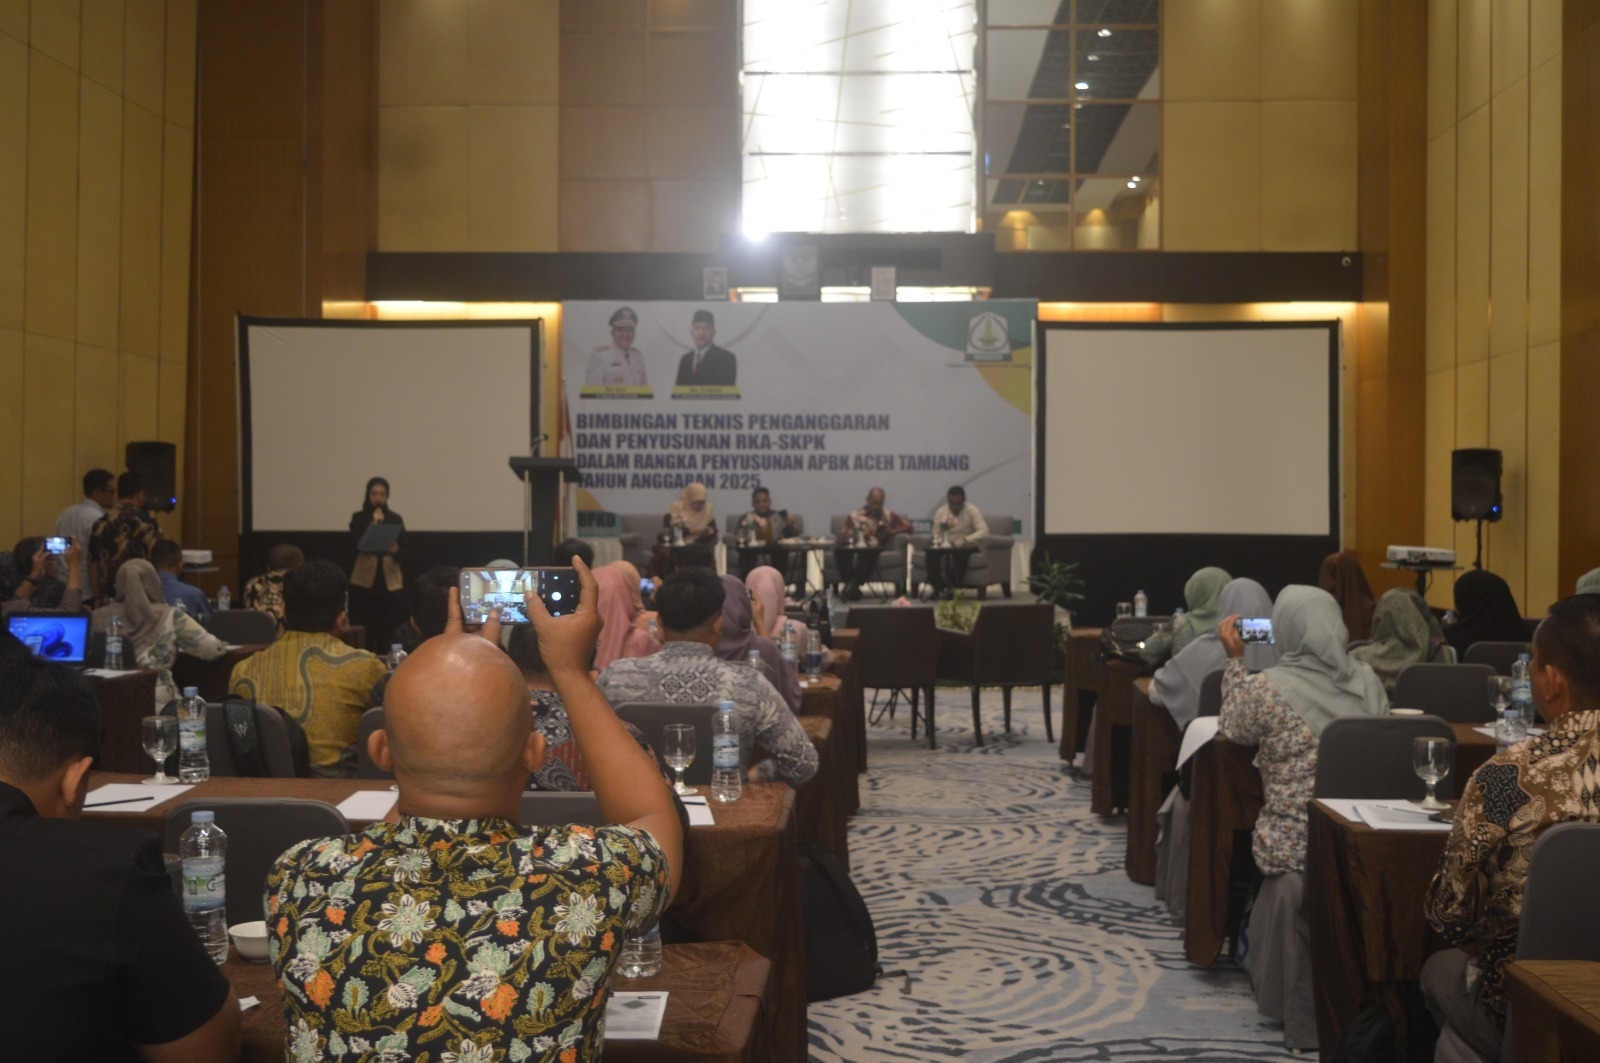 BPKD Kabupaten Aceh Taming Menyelenggaran Bimtek Penganggaran dan Penyusunan RKA-SKPK Dalam Rangka Penyusunan APBK Aceh Tamiang TA 2025